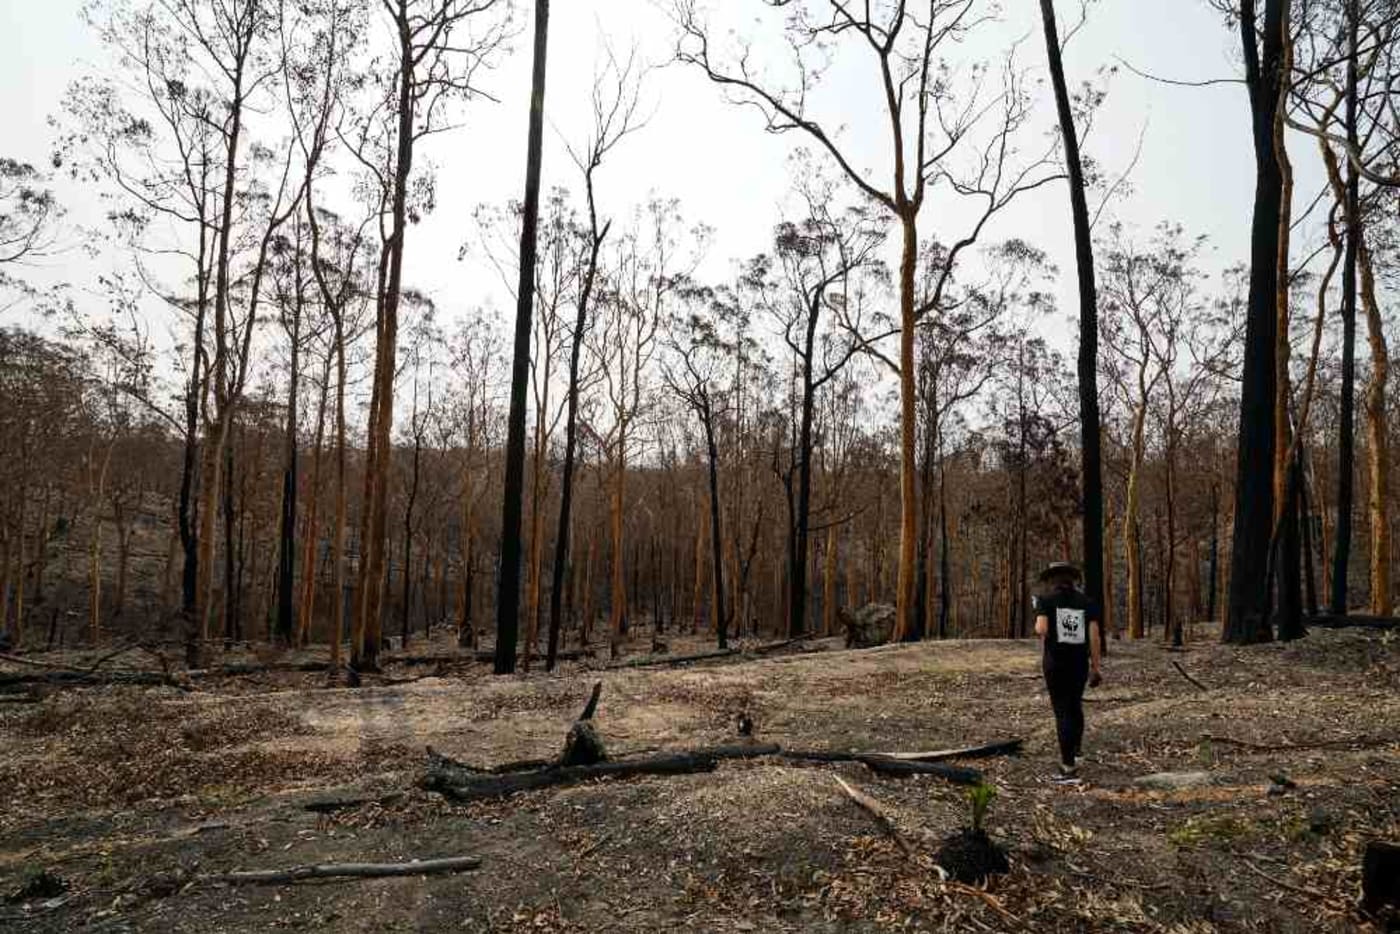 WWF observes the bushfire aftermath at Batemans Bay= NSW